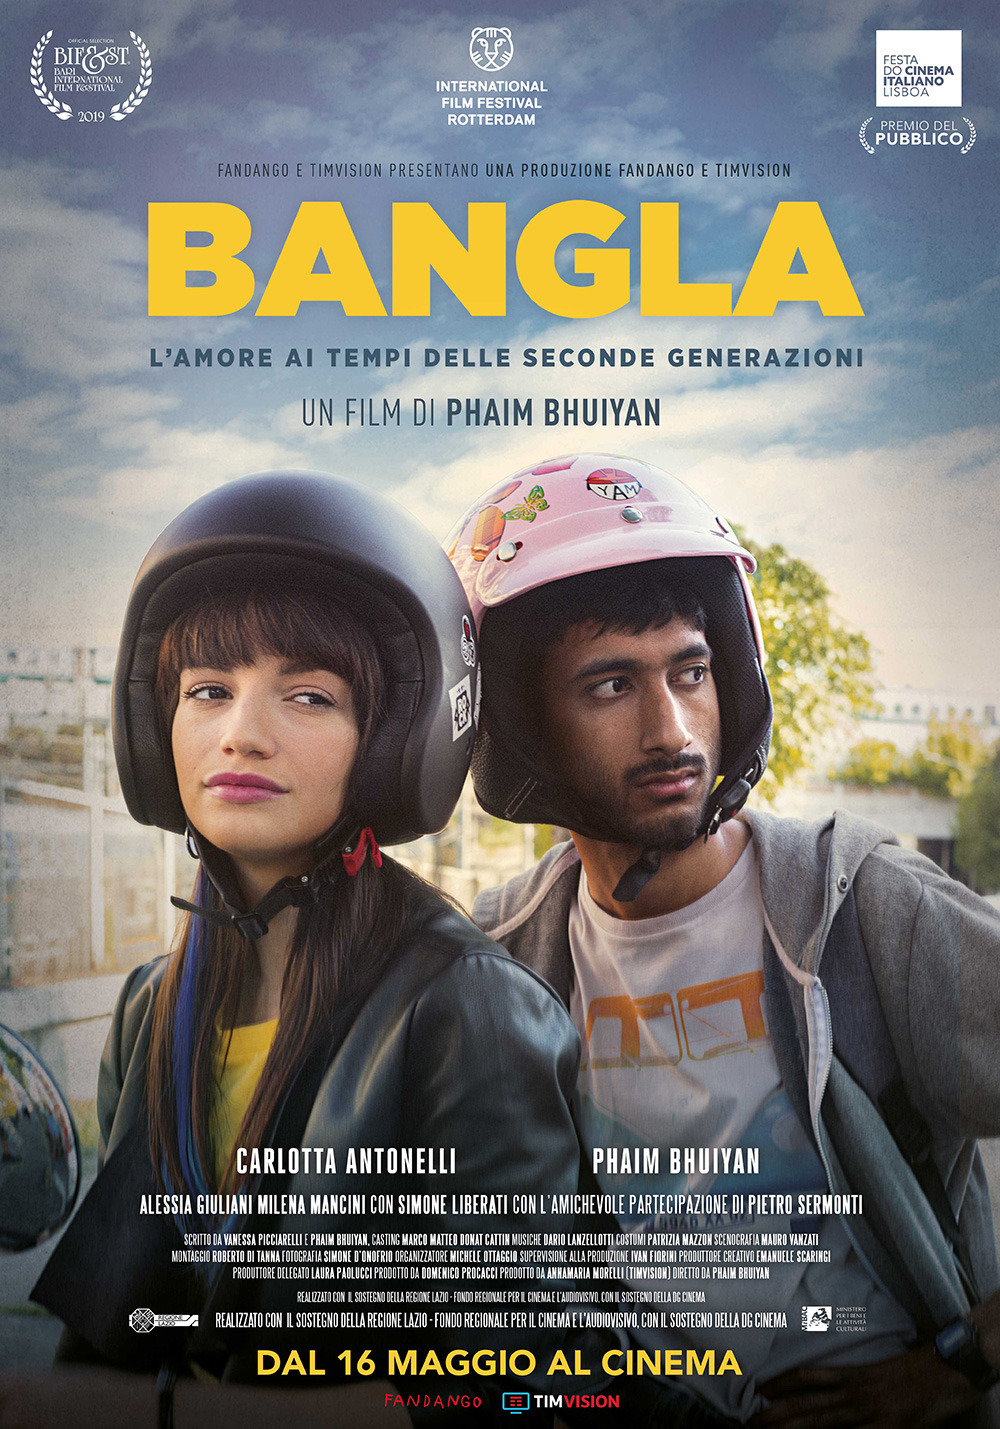 Extra Large Movie Poster Image for Bangla 